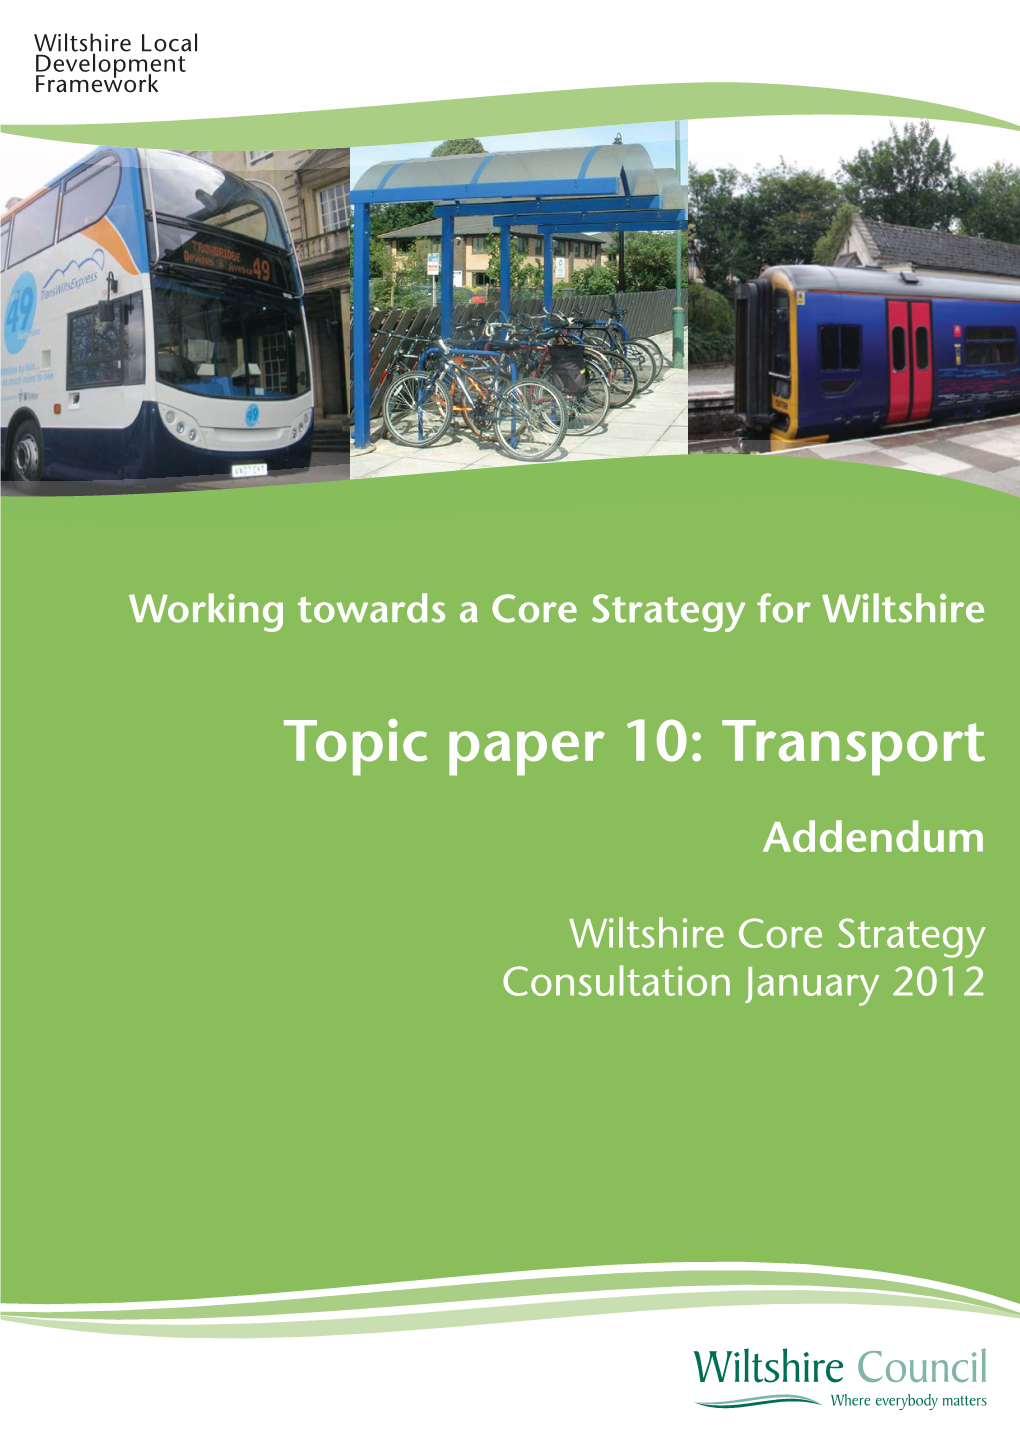 Topic Paper 10: Transport